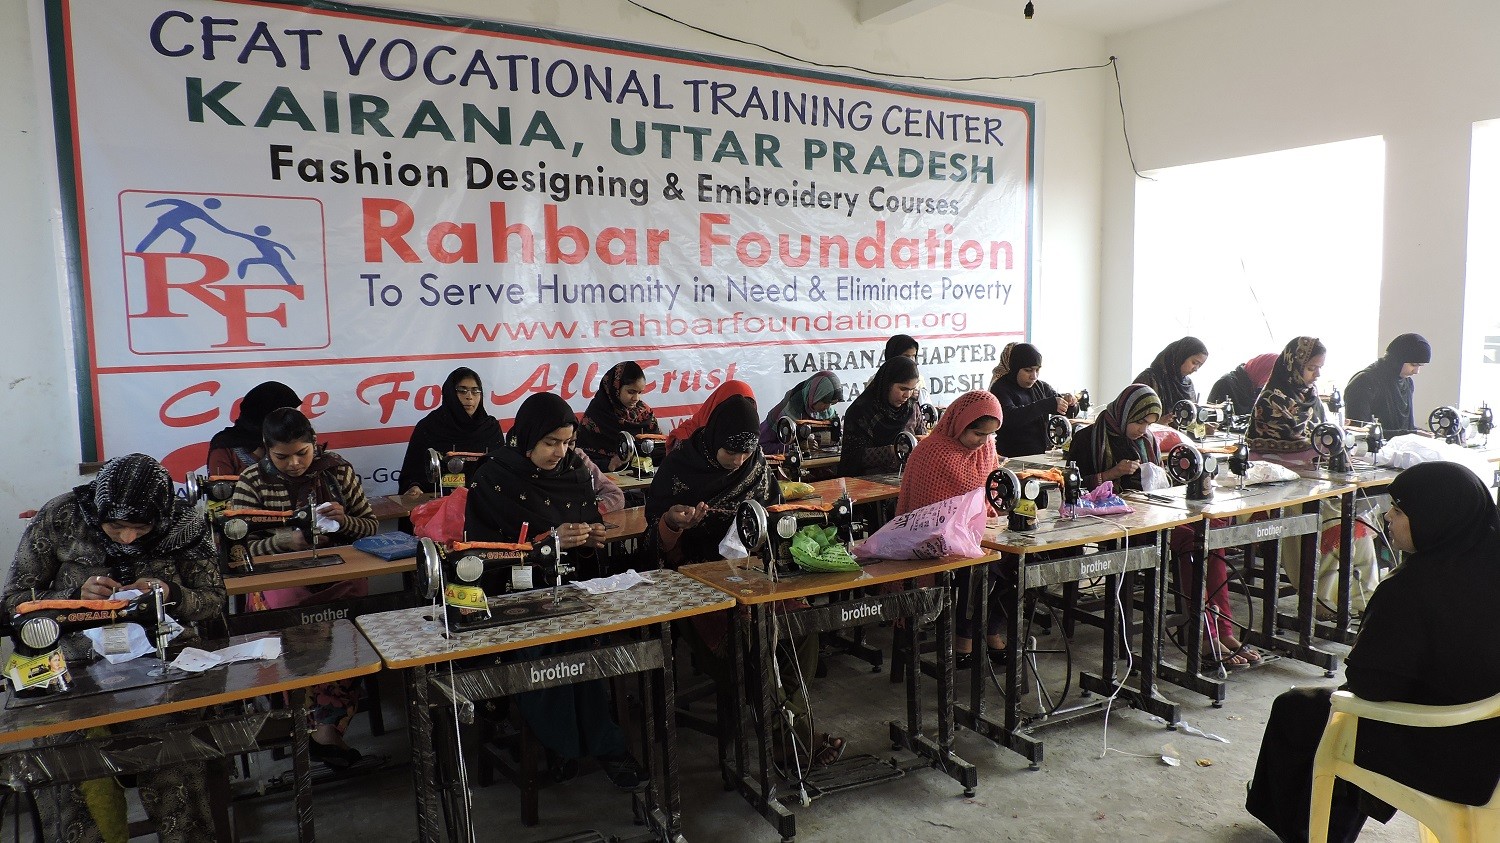 CFAT Vocational Training Center at Kairana, UP